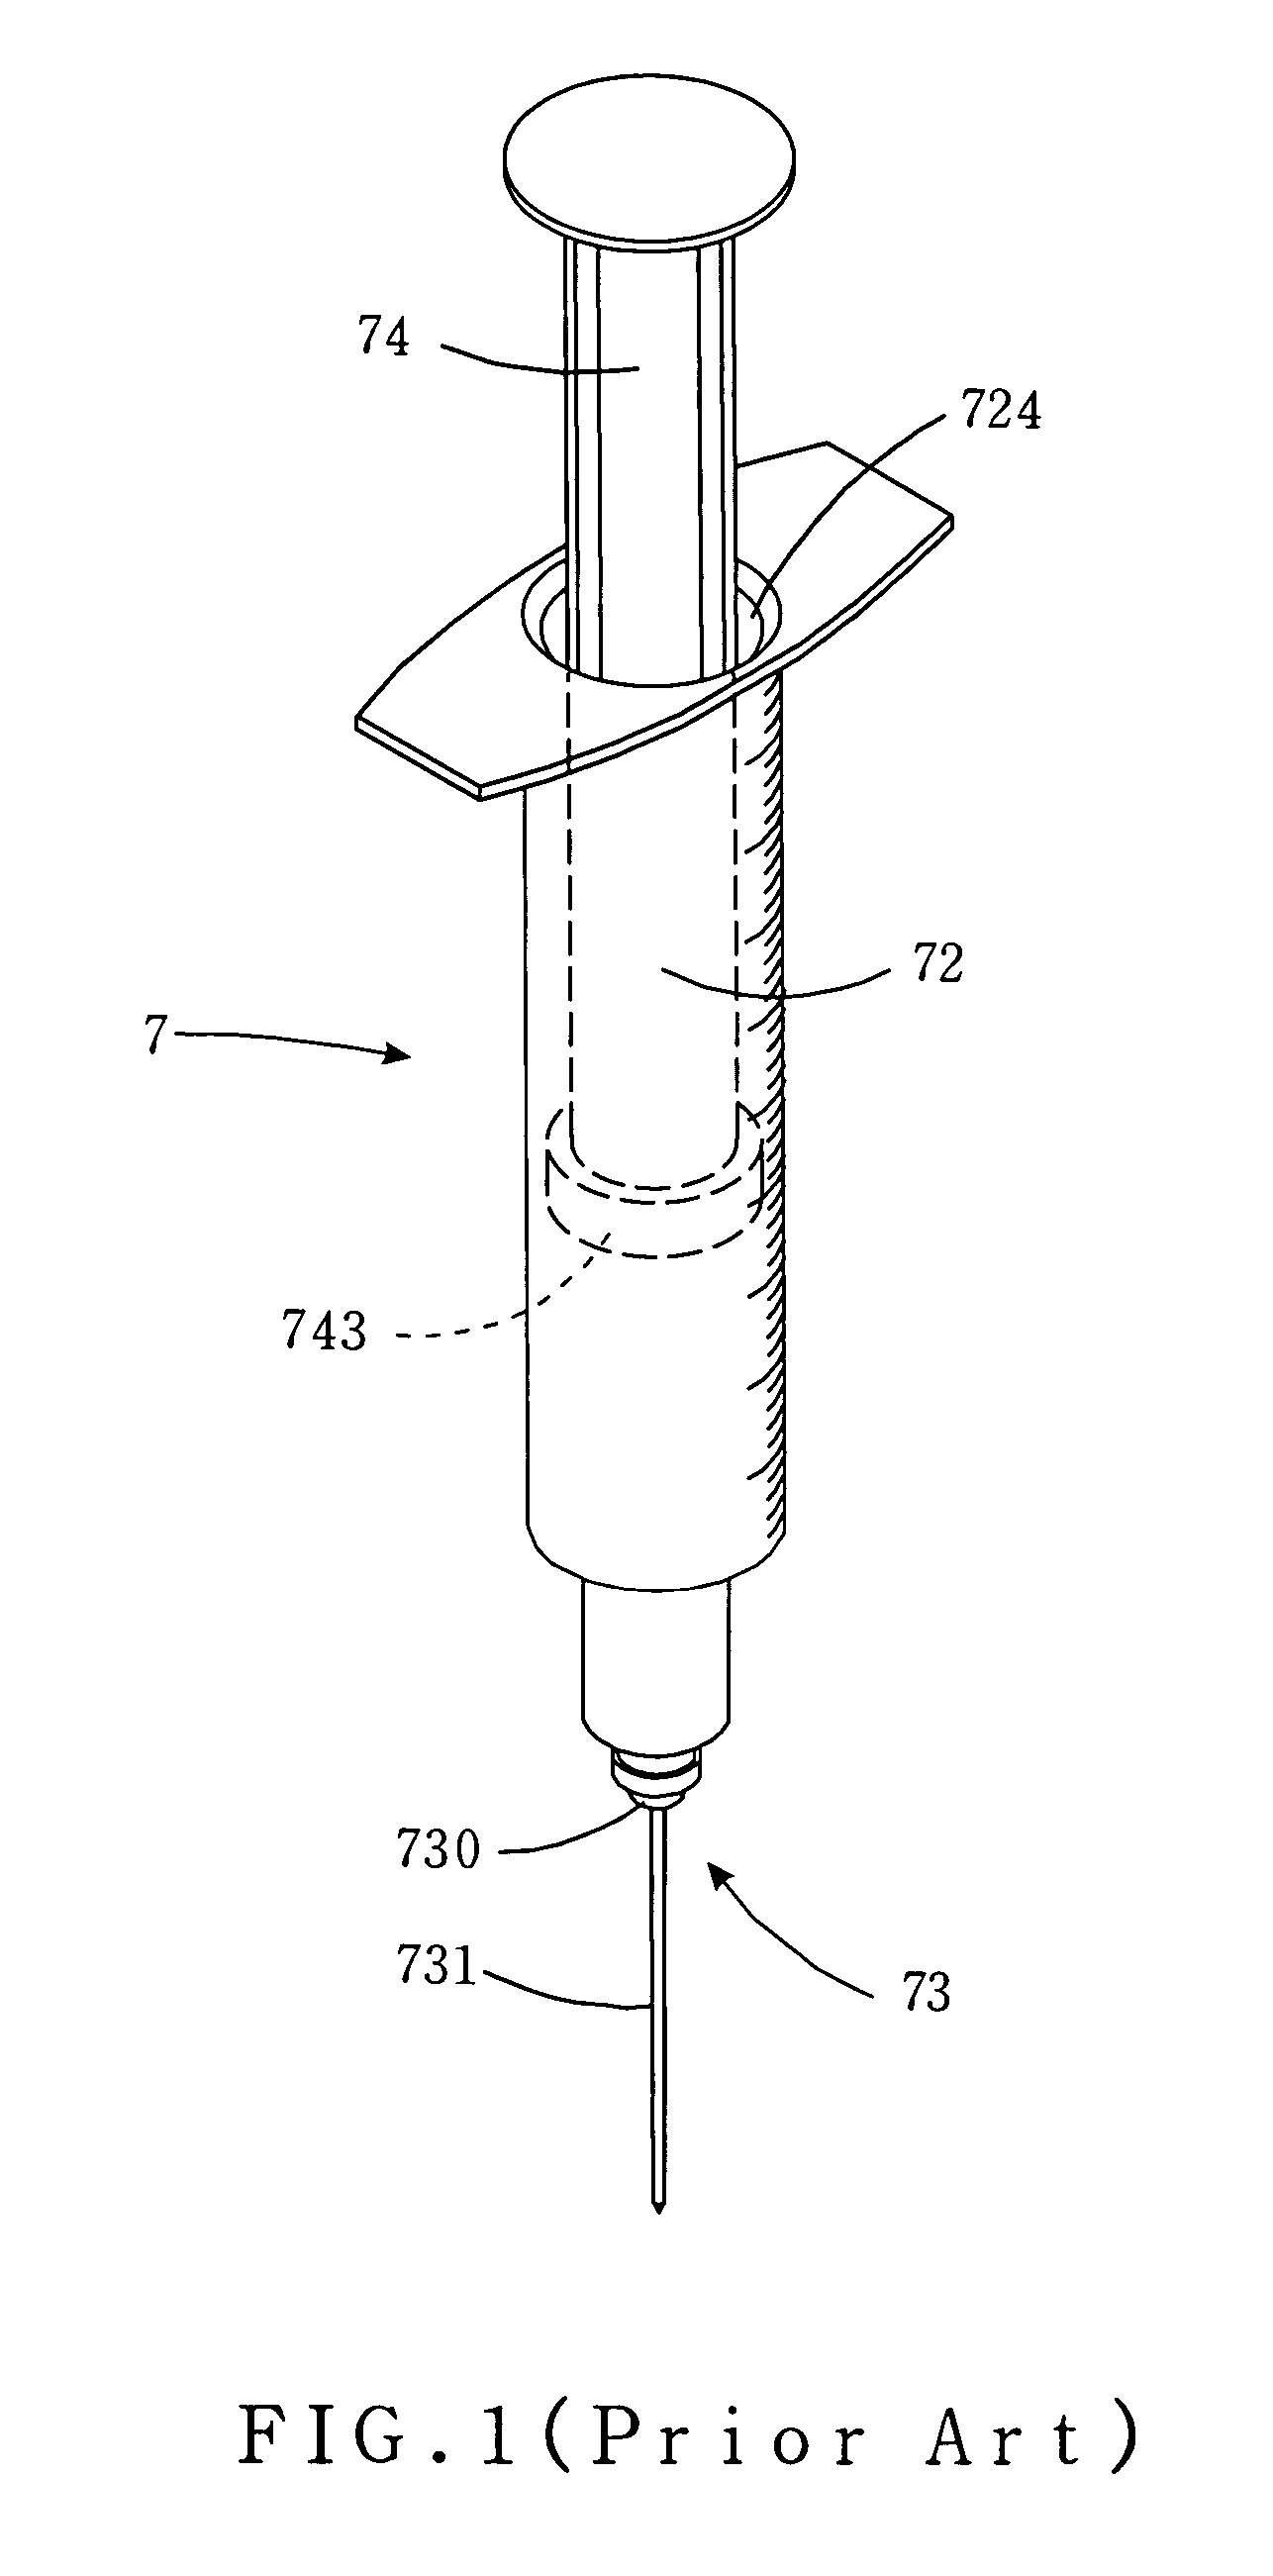 Safety syringe with needle retracting mechanism